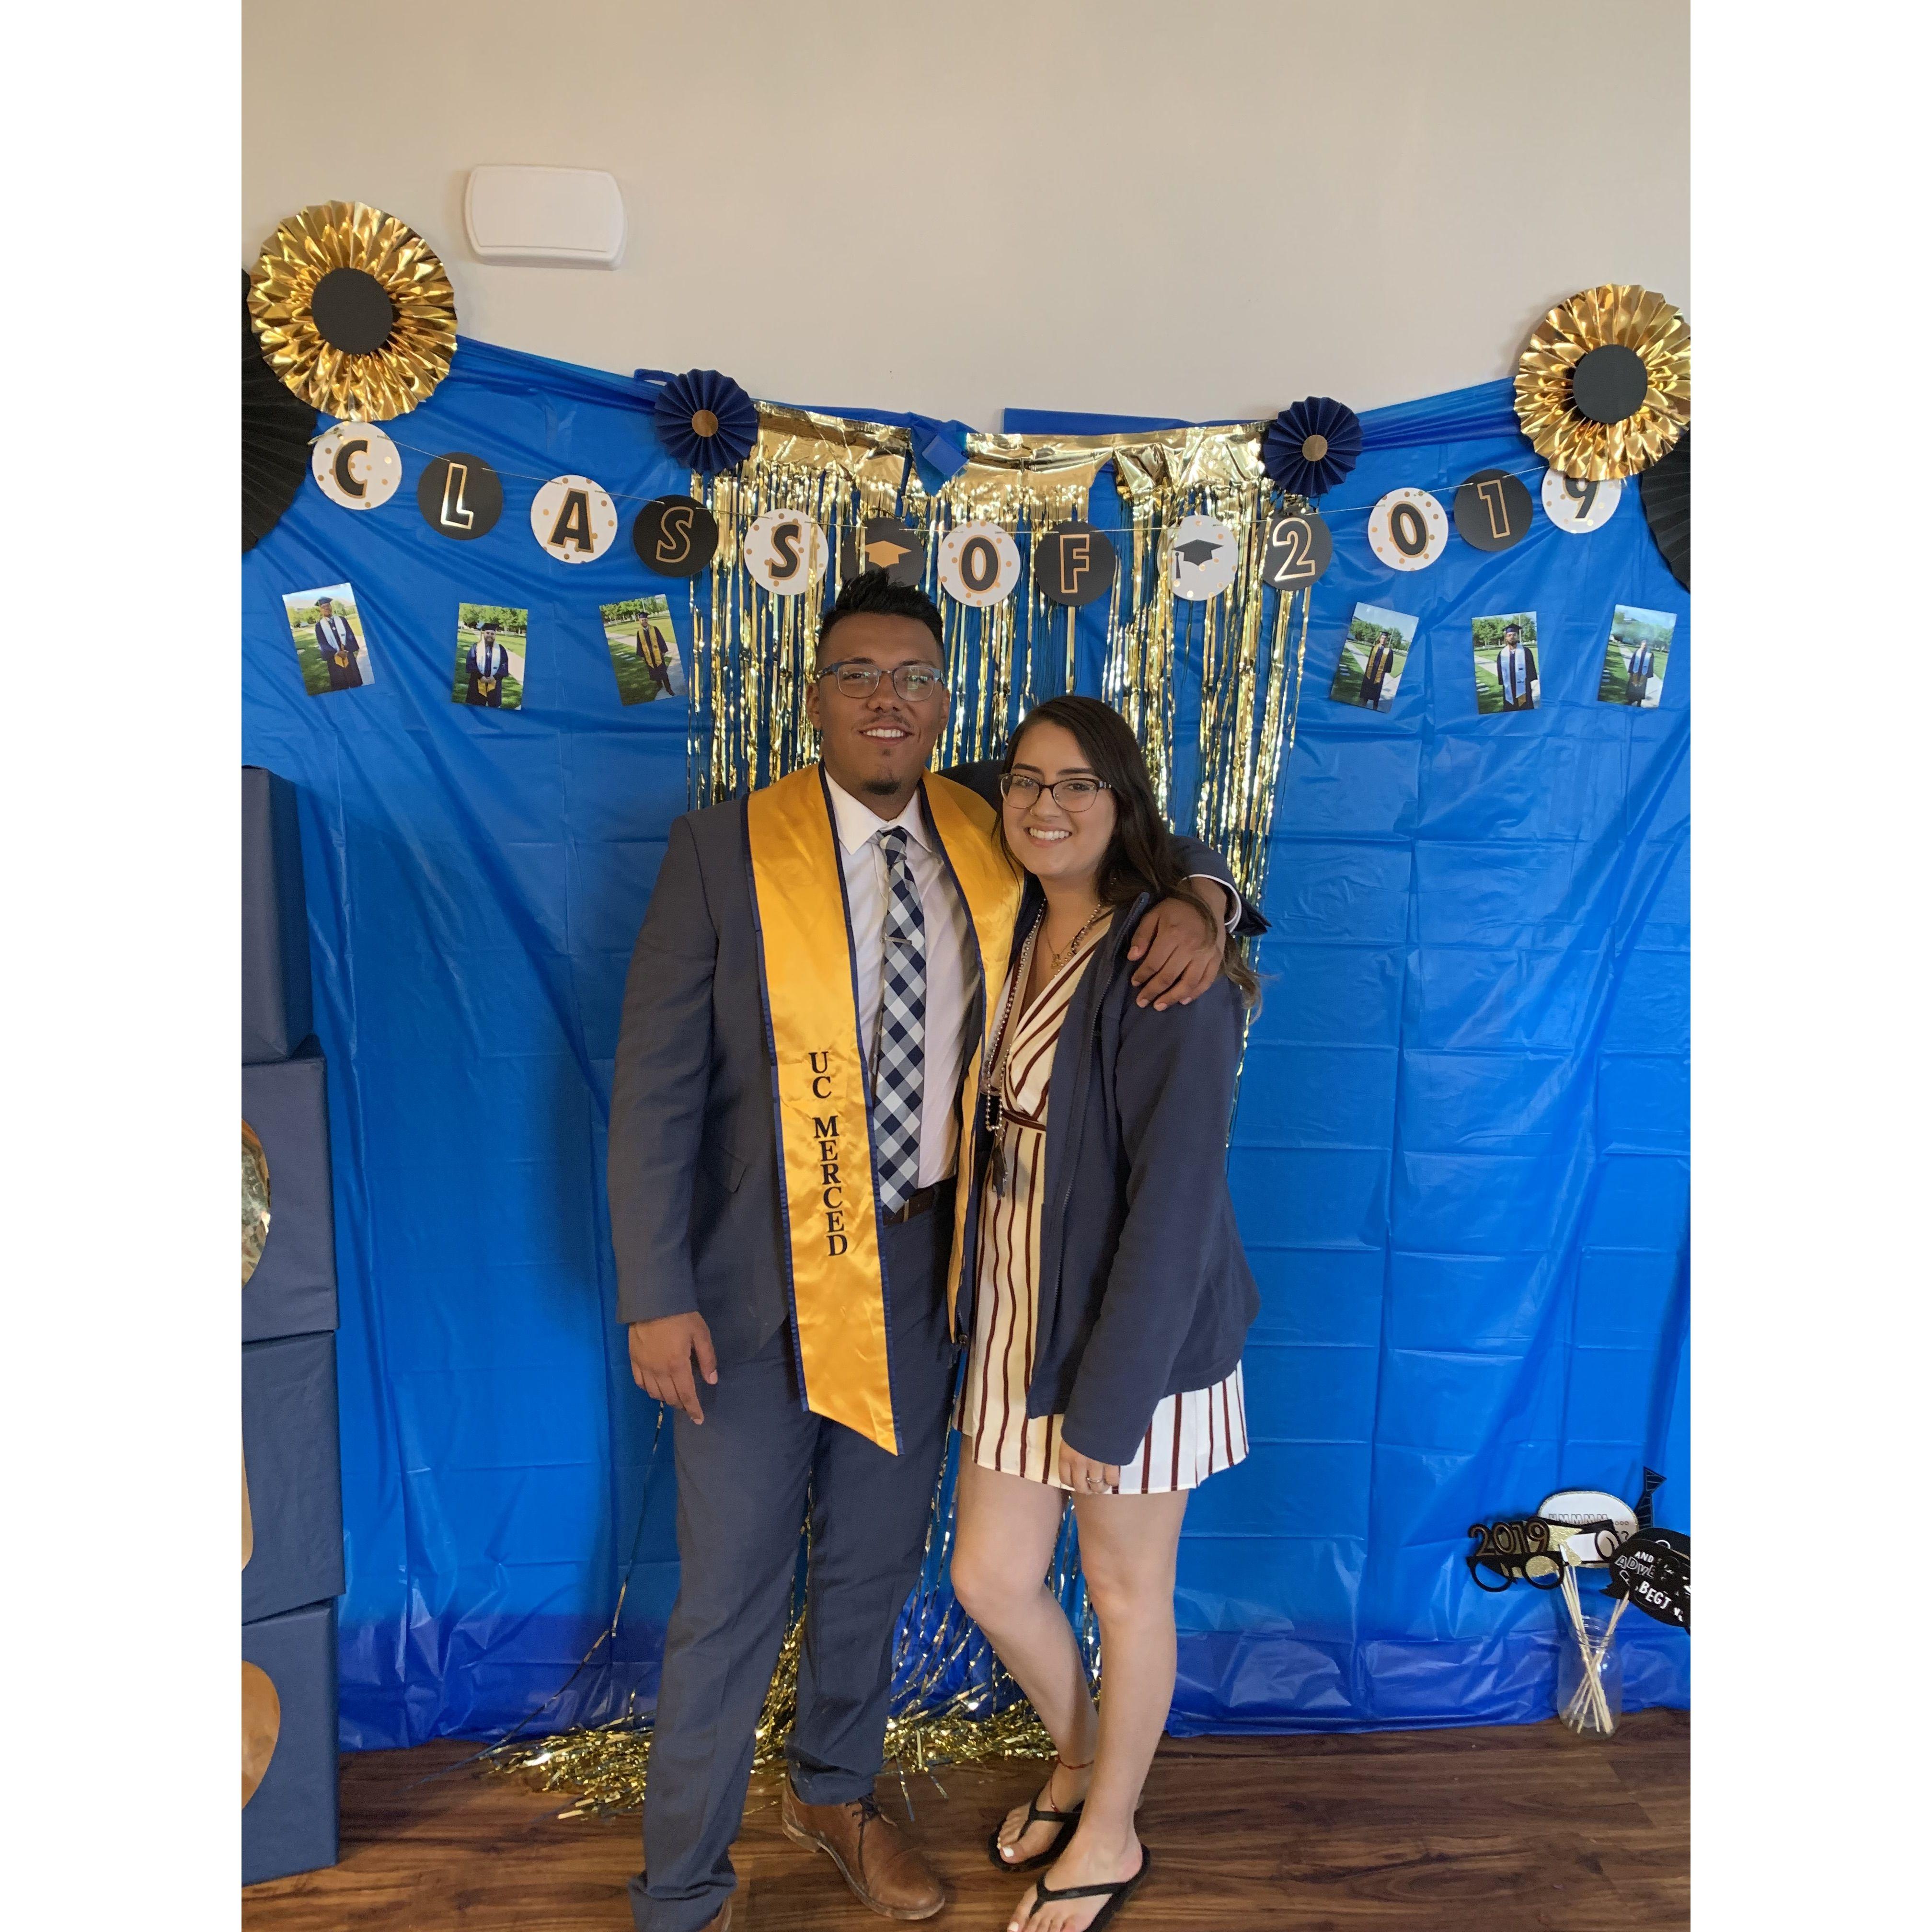 Alex graduated May 2019